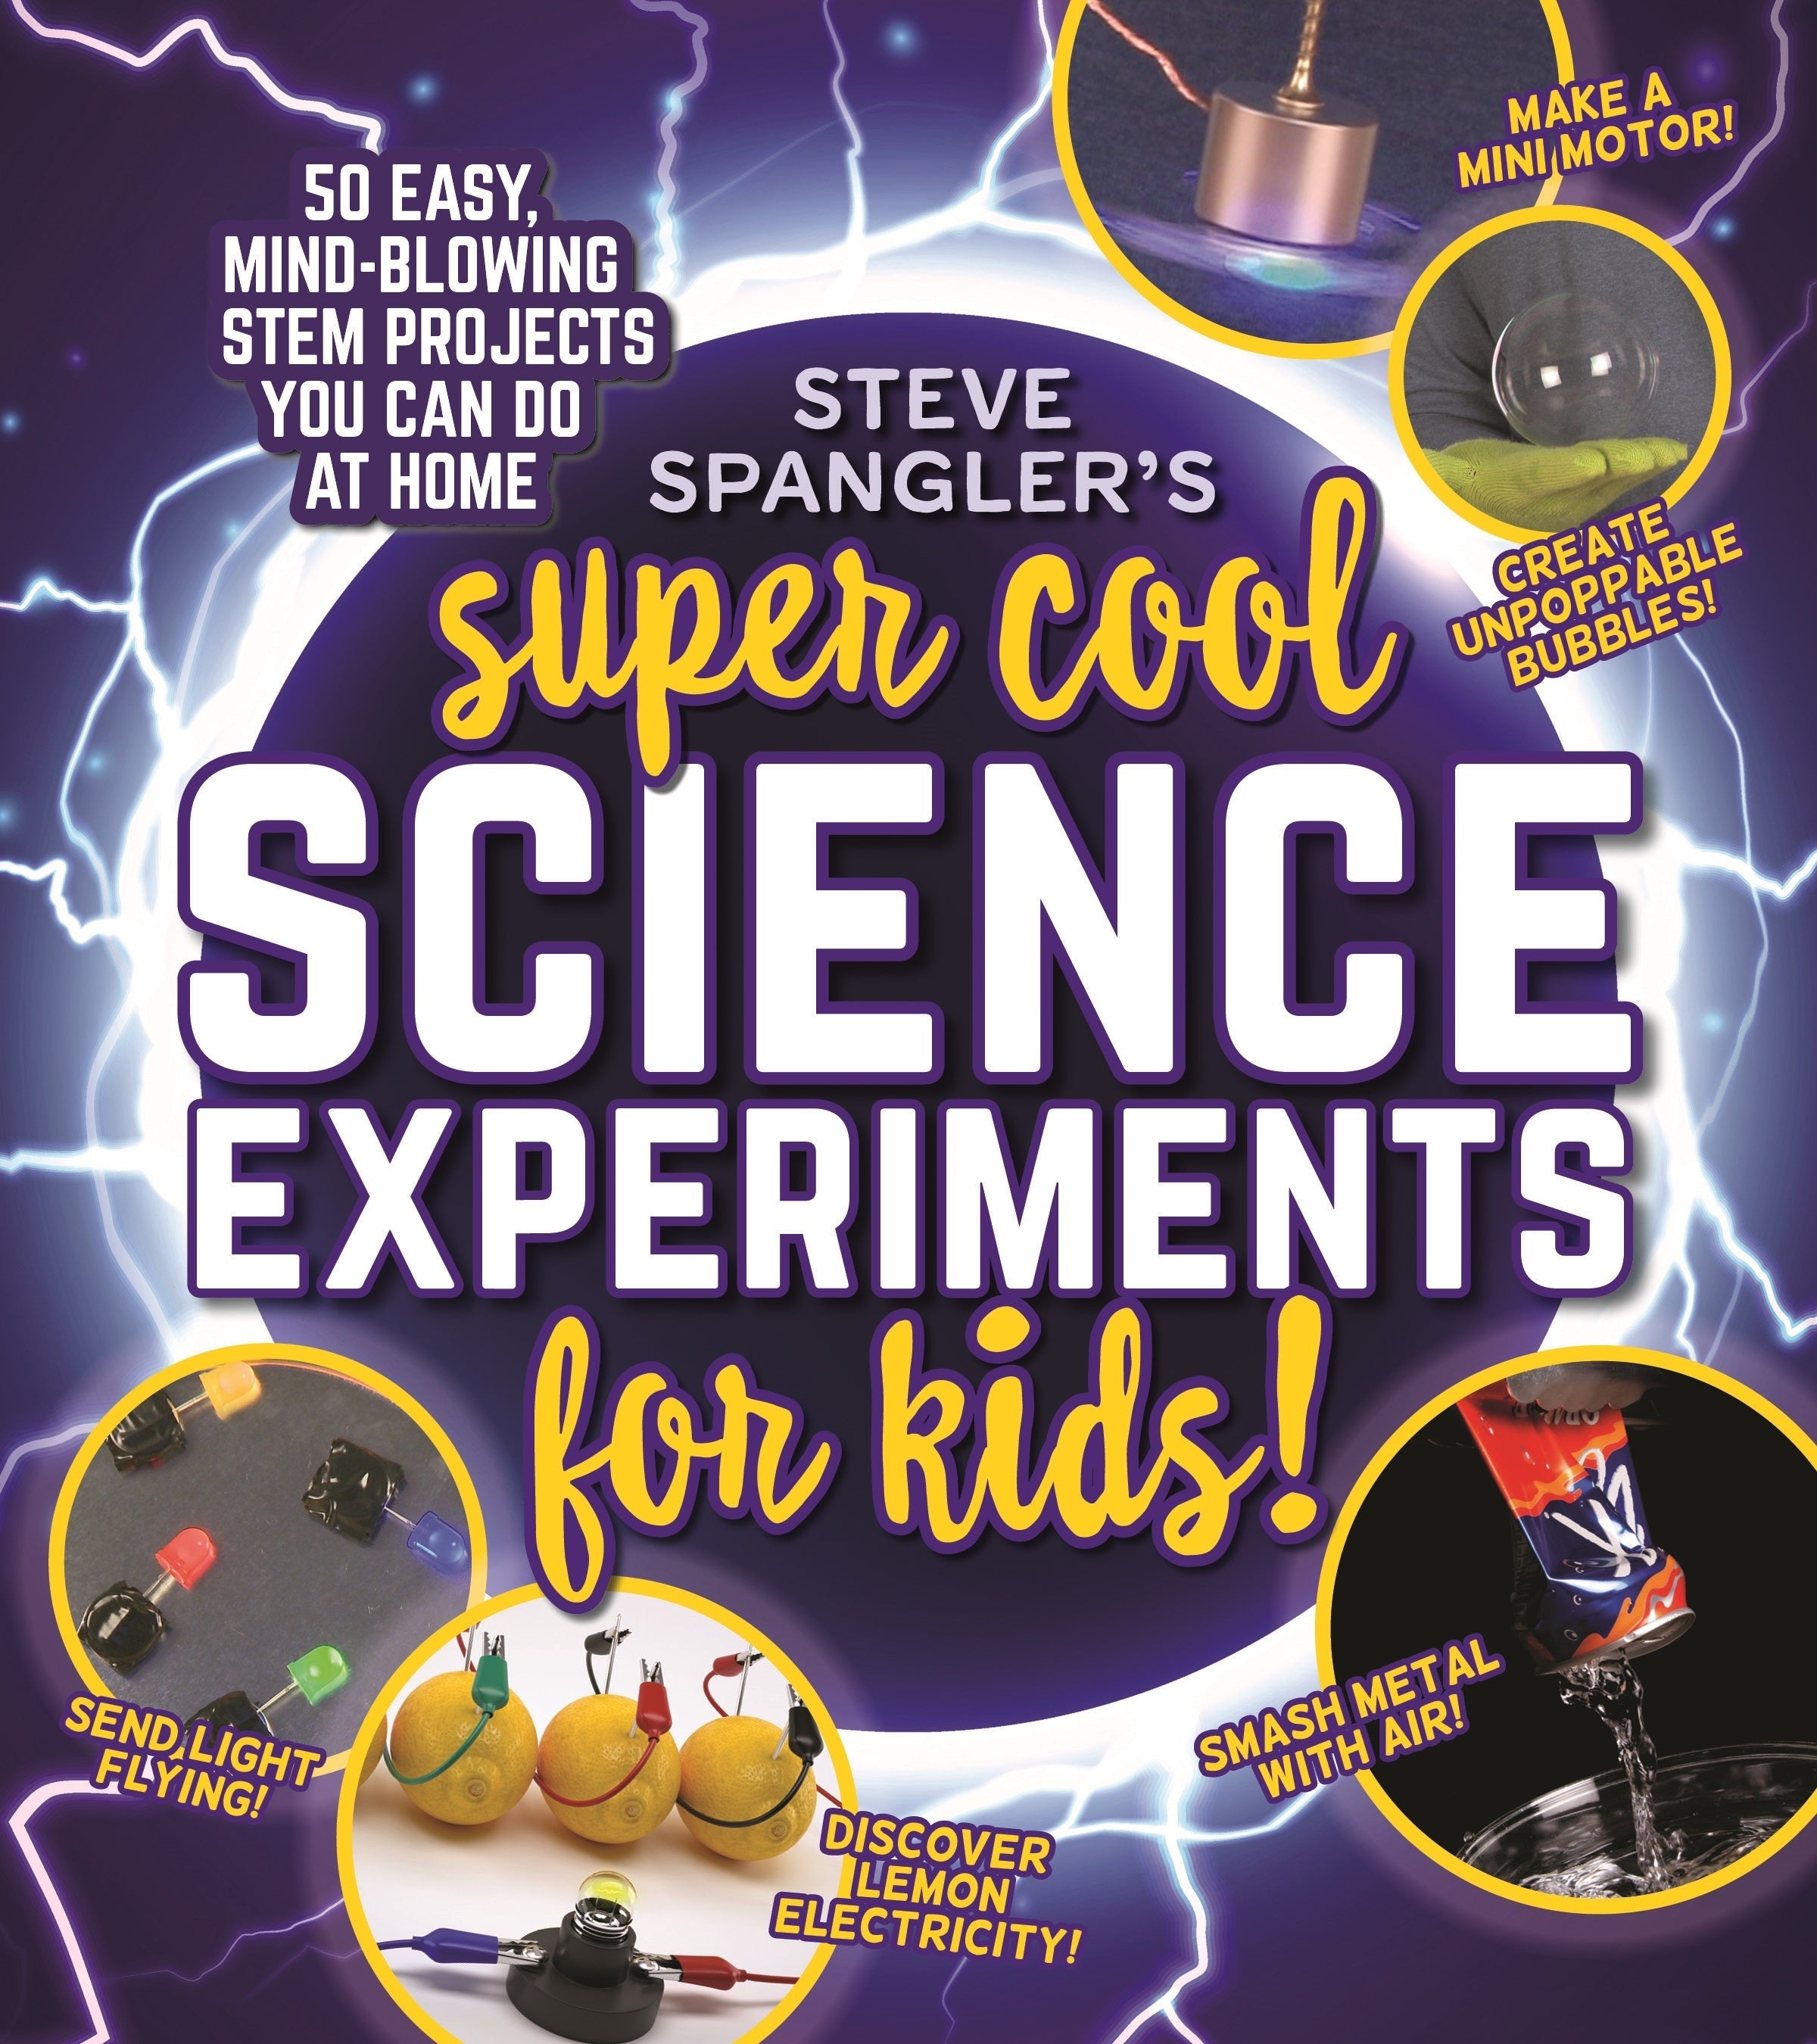 20 at Home Science Crafts for Kids - The Crafty Blog Stalker